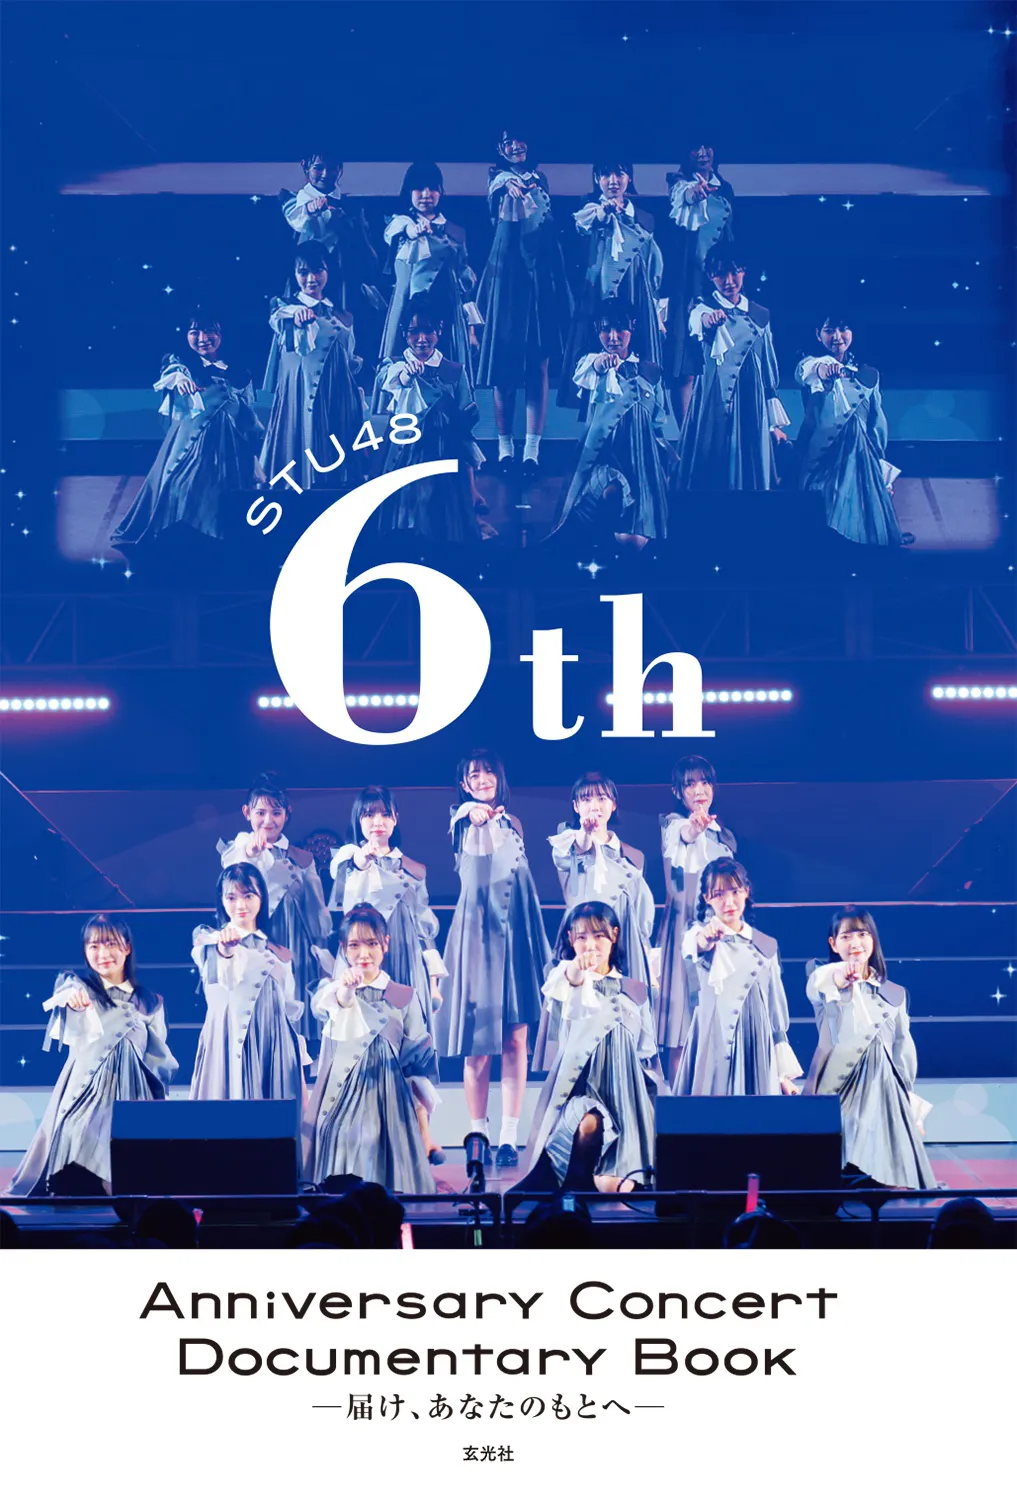 「STU48 6th Anniversary Concert Documentary Book-届け、あなたのもとへ-」表紙